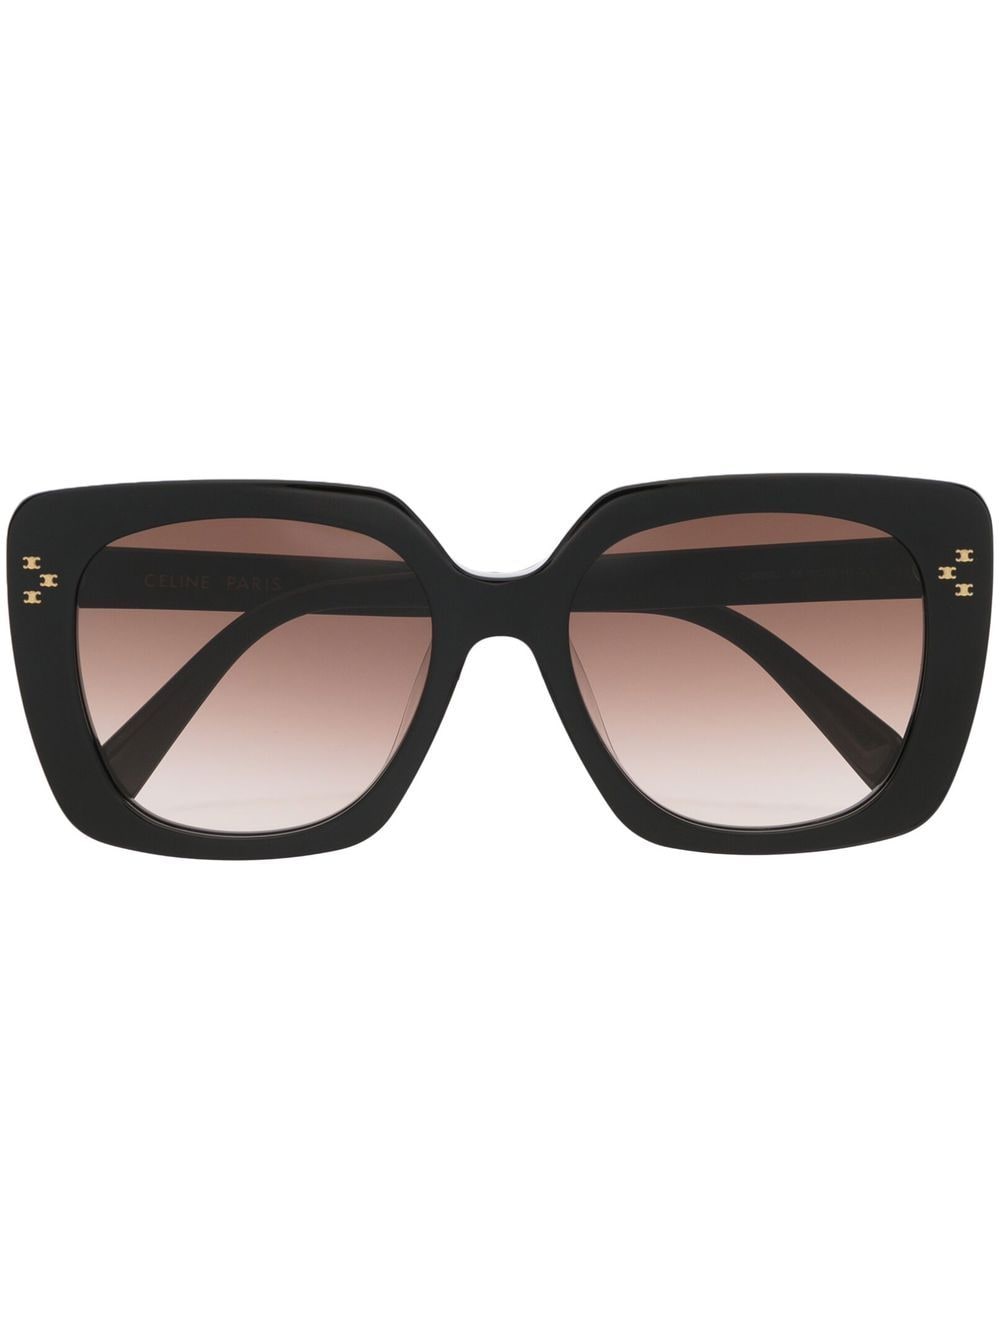 Celine Eyewear - square-frame sunglasses - women - Acetate - 55 - Black